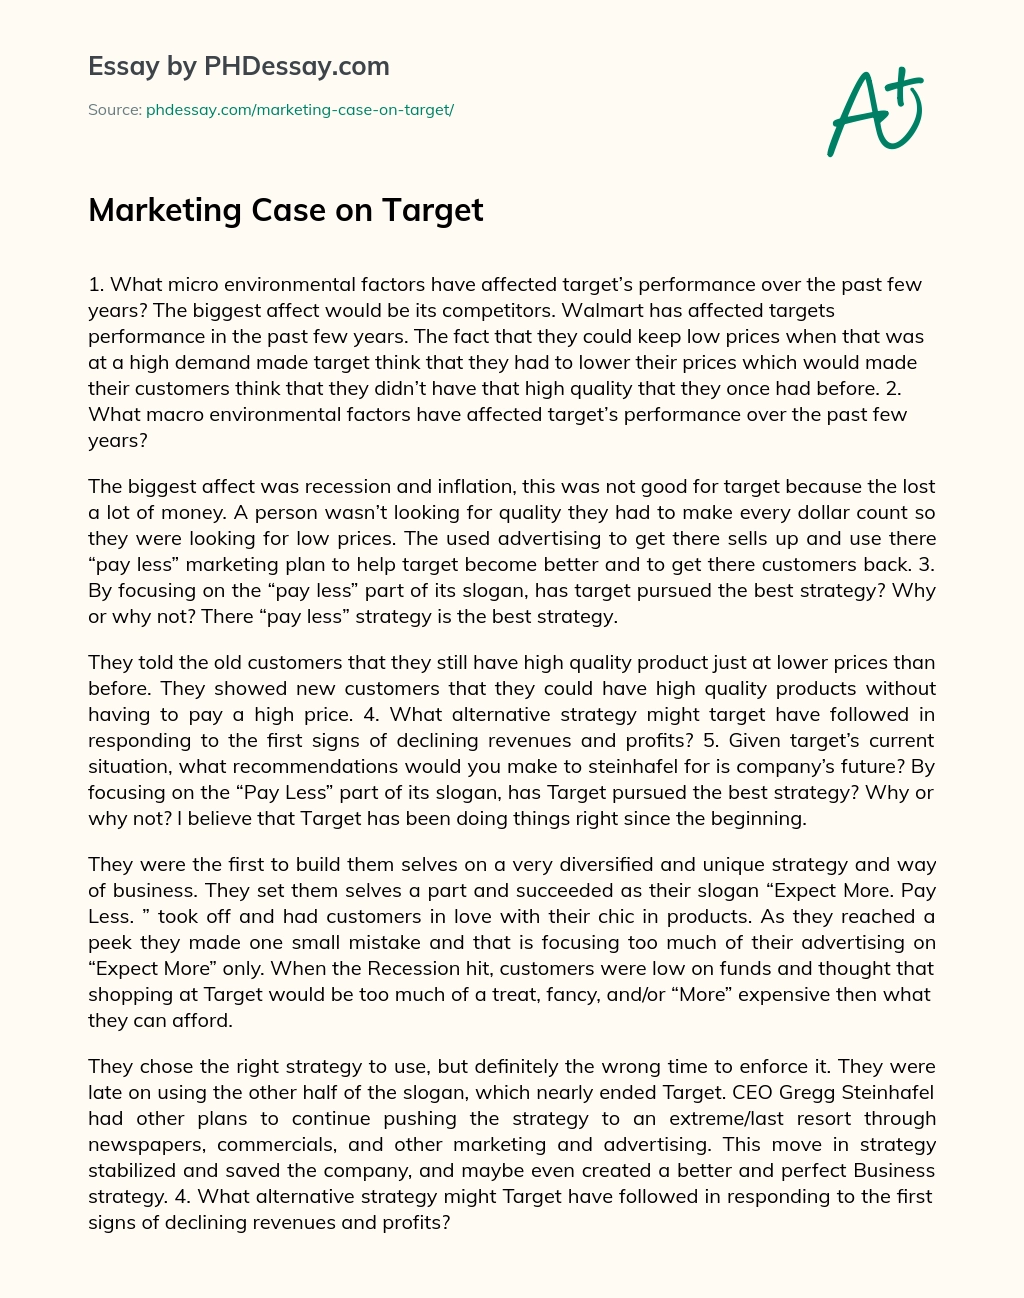 Marketing Case on Target essay